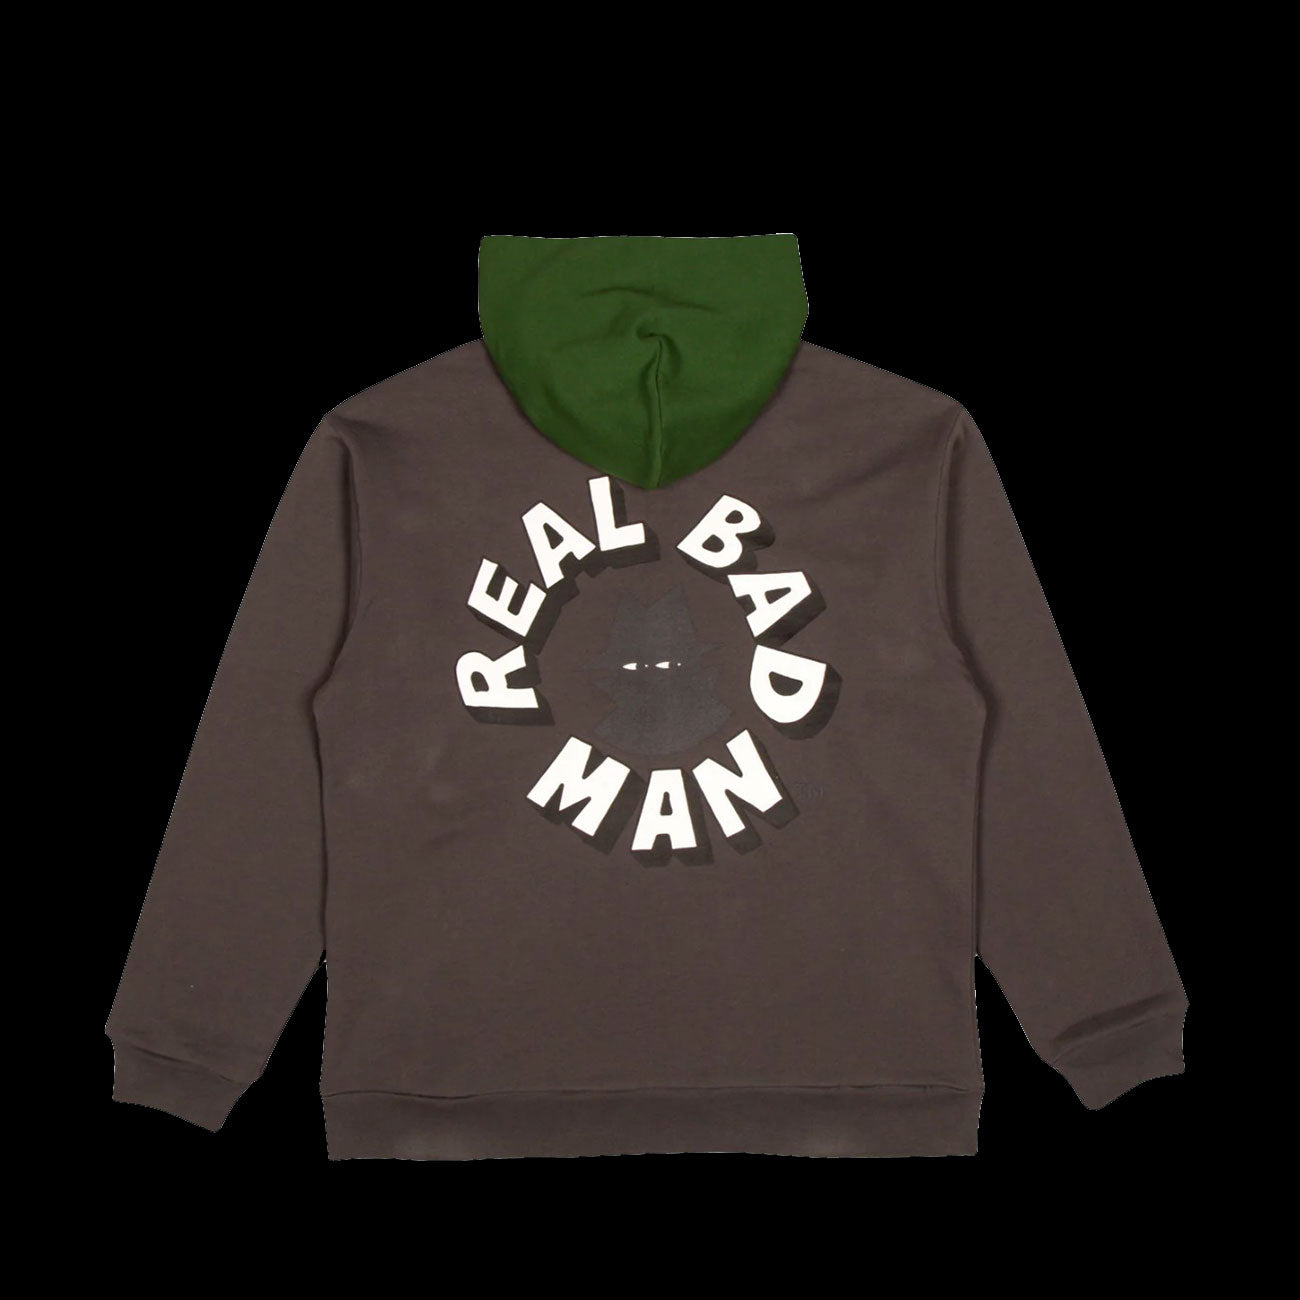 Real Bad Man 2 Tone Hoodie Fleece (Black/Green)